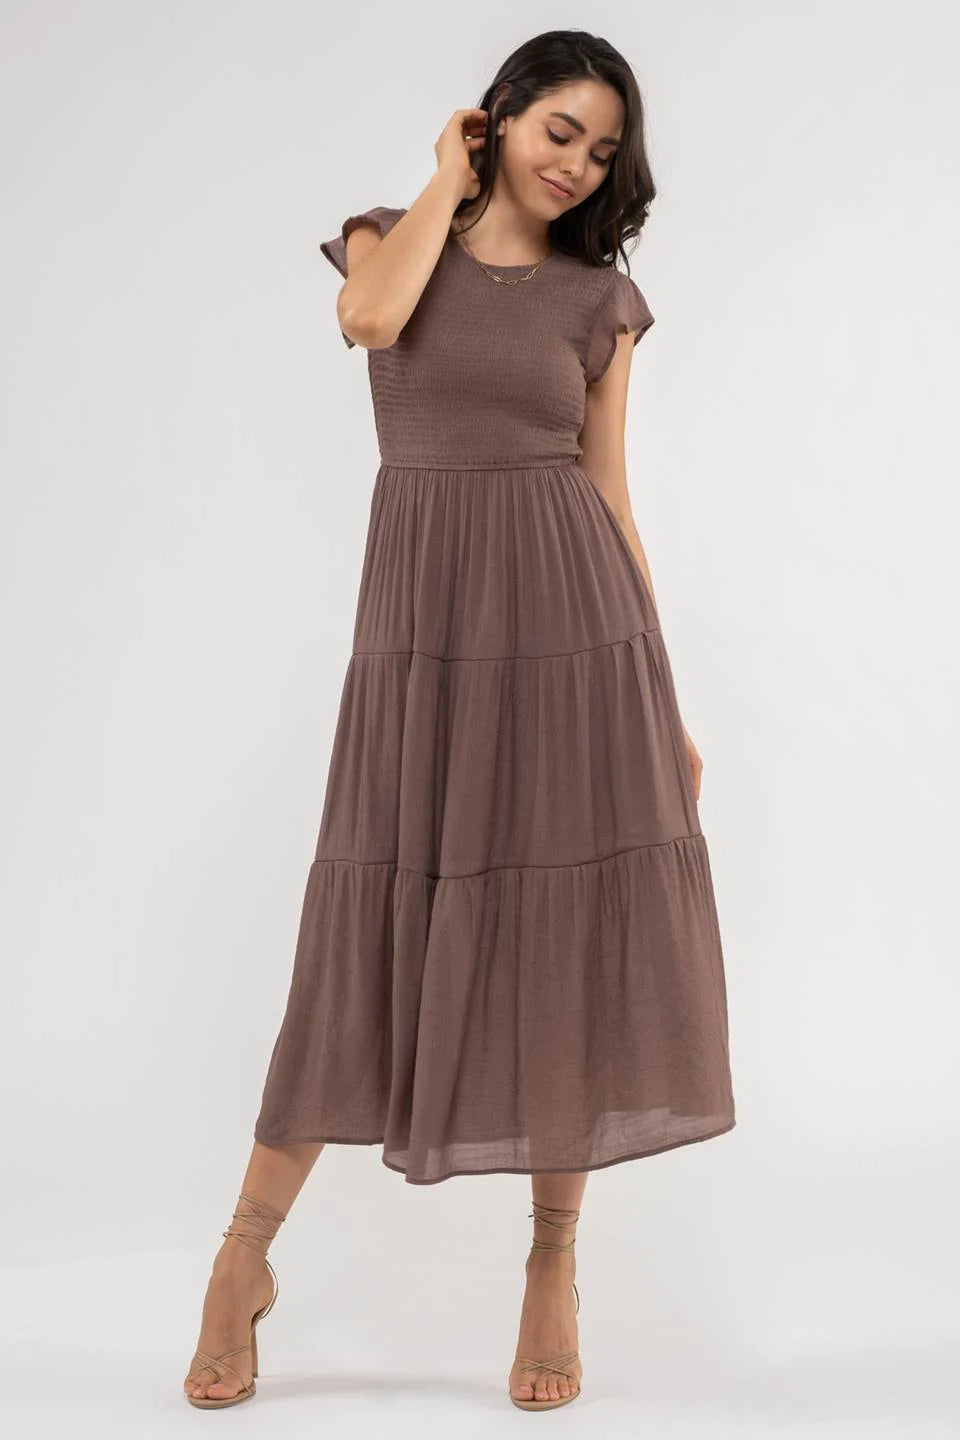 Smocked Tiered Midi Dress  (S-3X)(3 Colors)